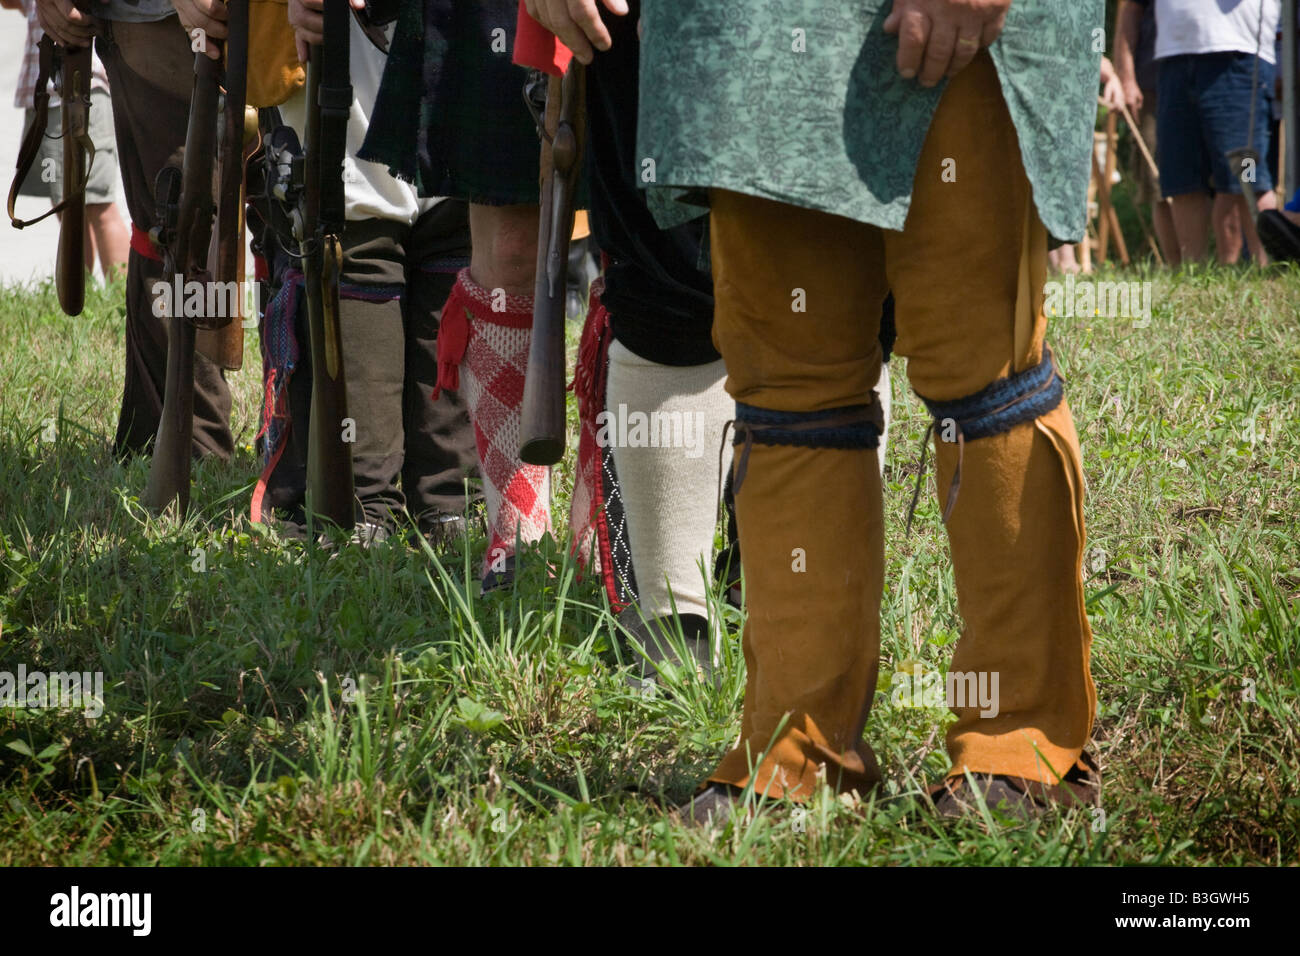 Footwear leggings etc at Revolutionary War reenactment Mohawk Valley New York State Stock Photo